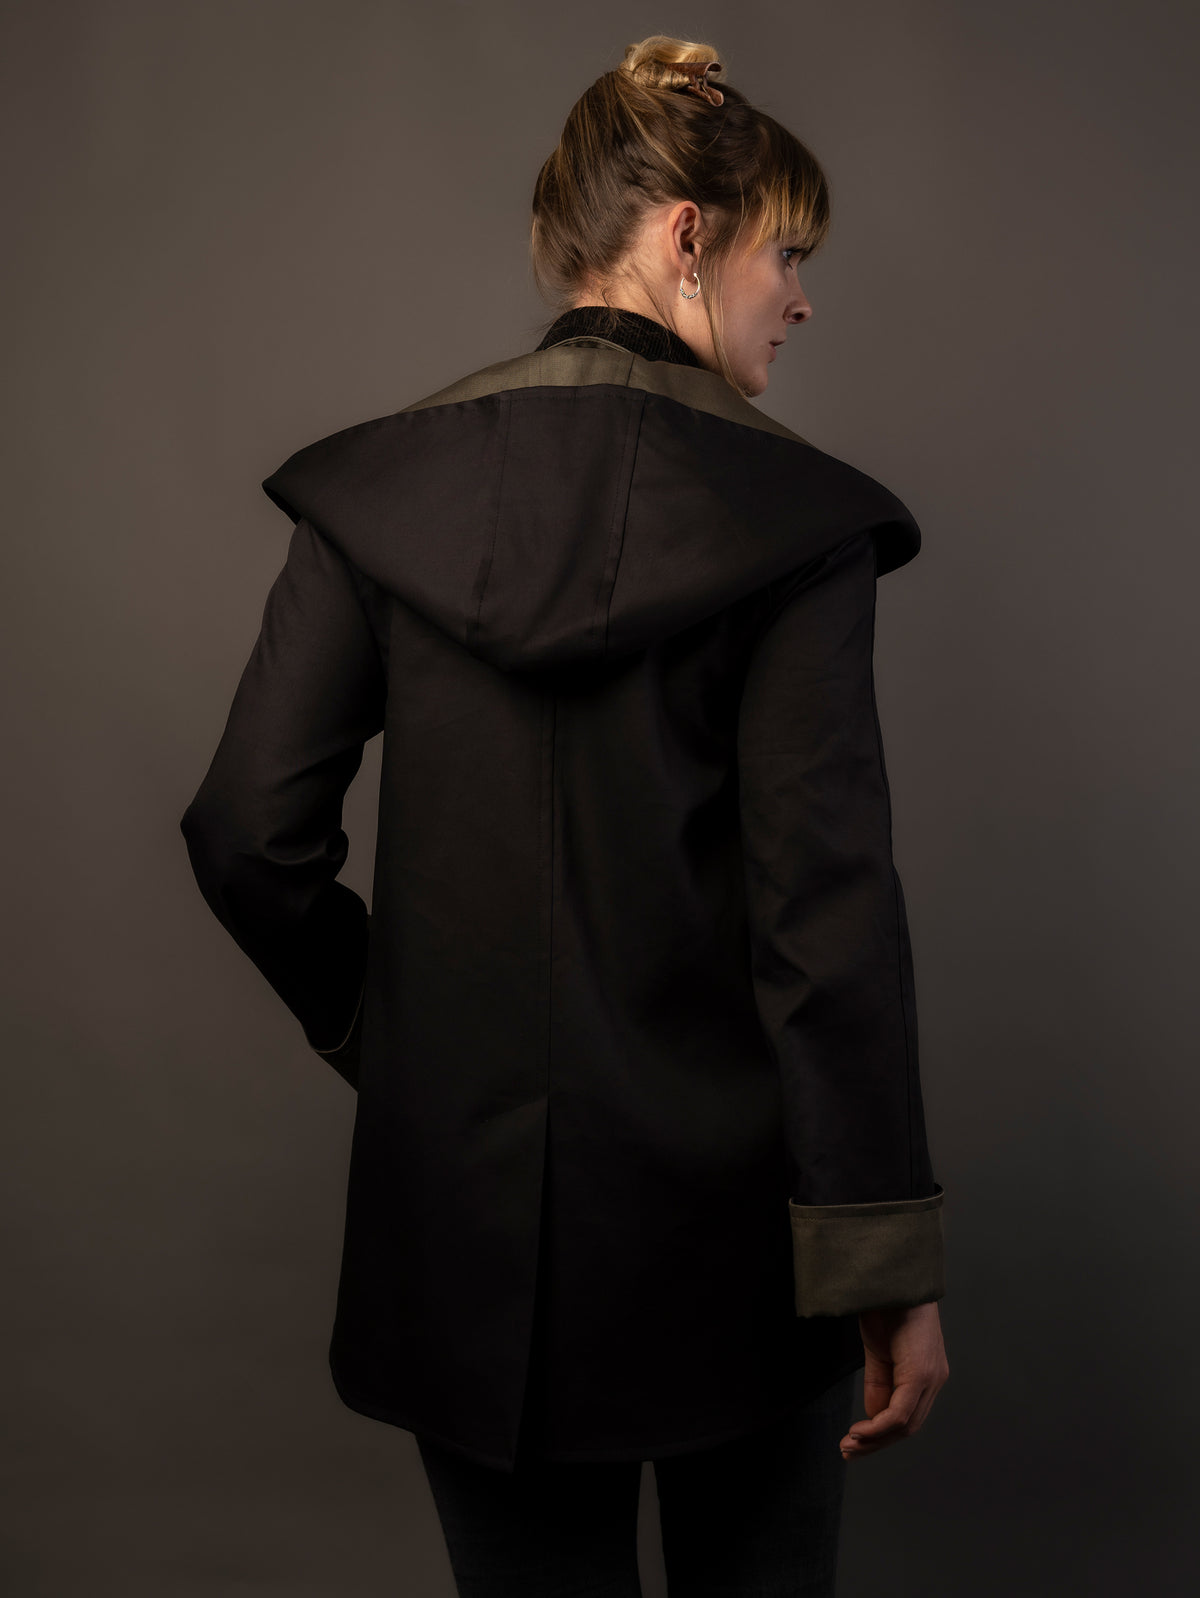 100% Waterproof Ladies Cotton Raincoat with hood. Made in the UK. 